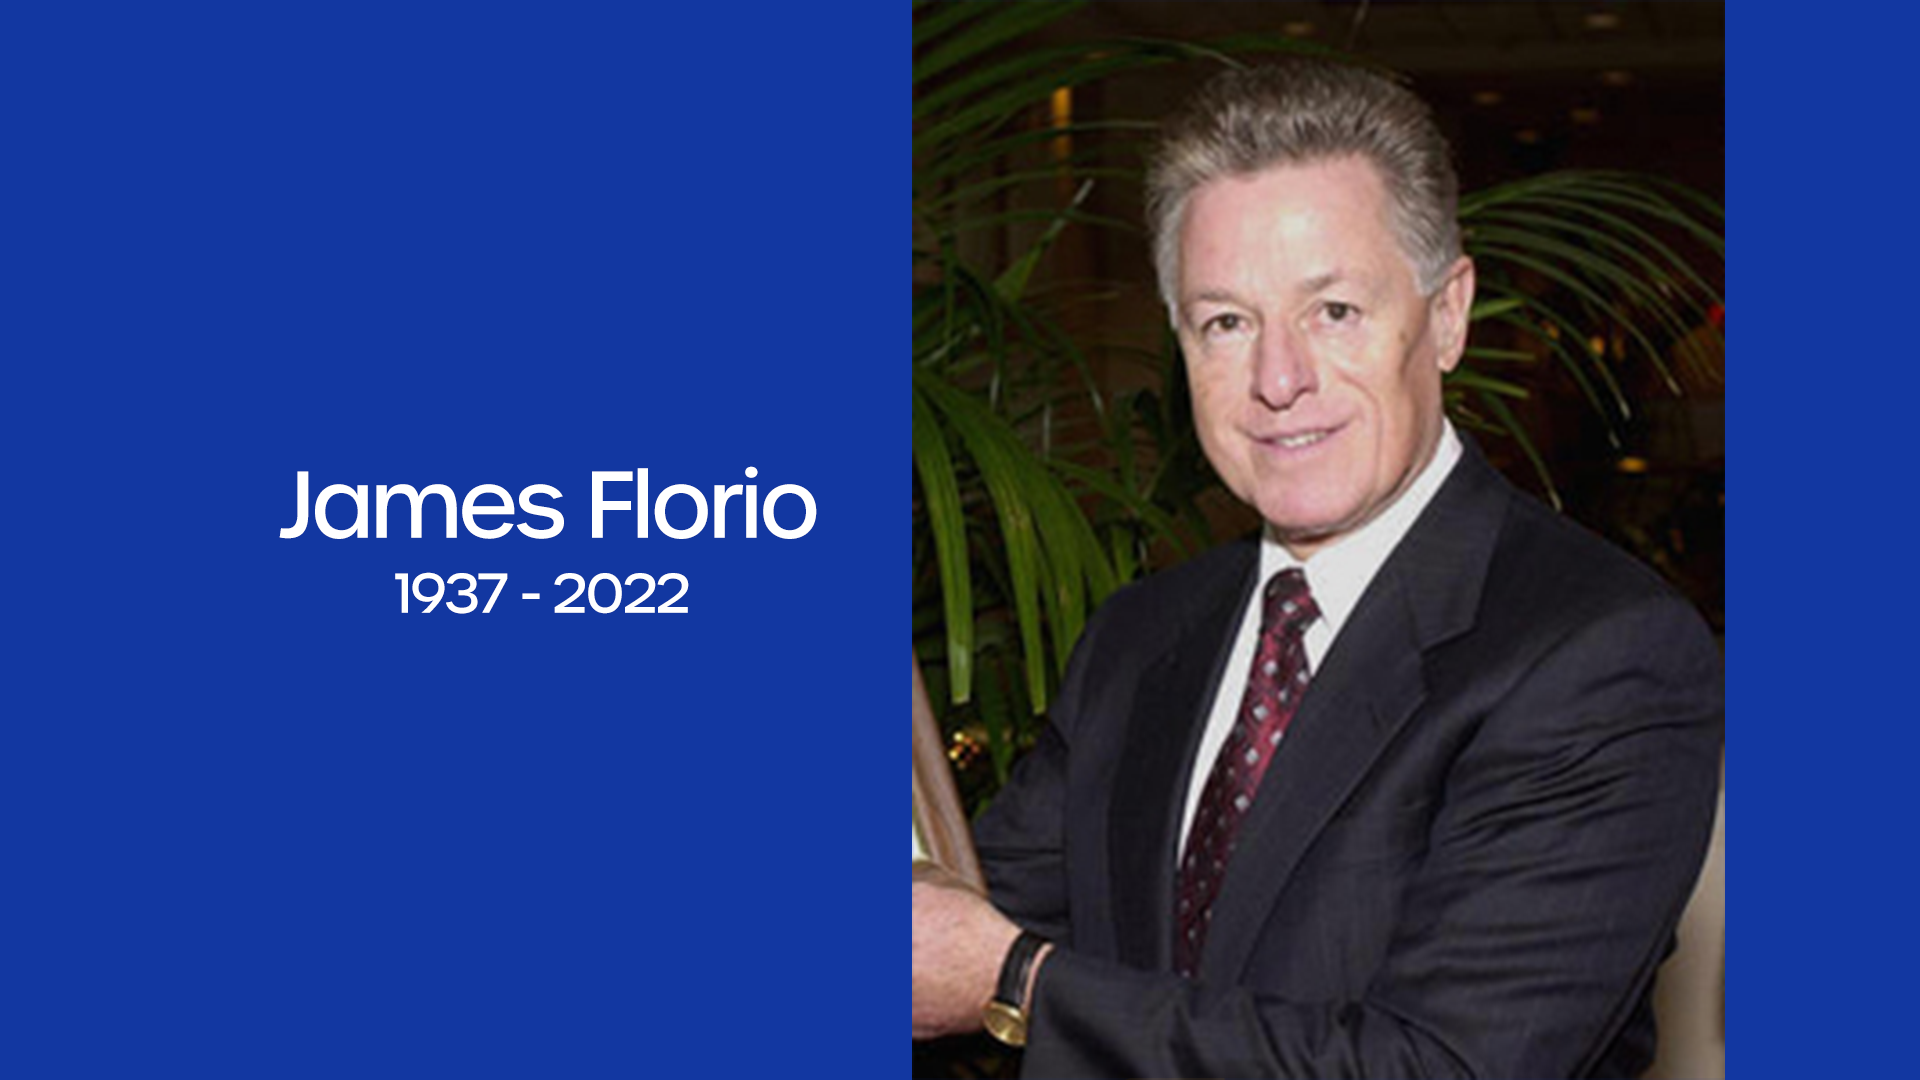 Former NJ Governor Jim Florio dies at 85